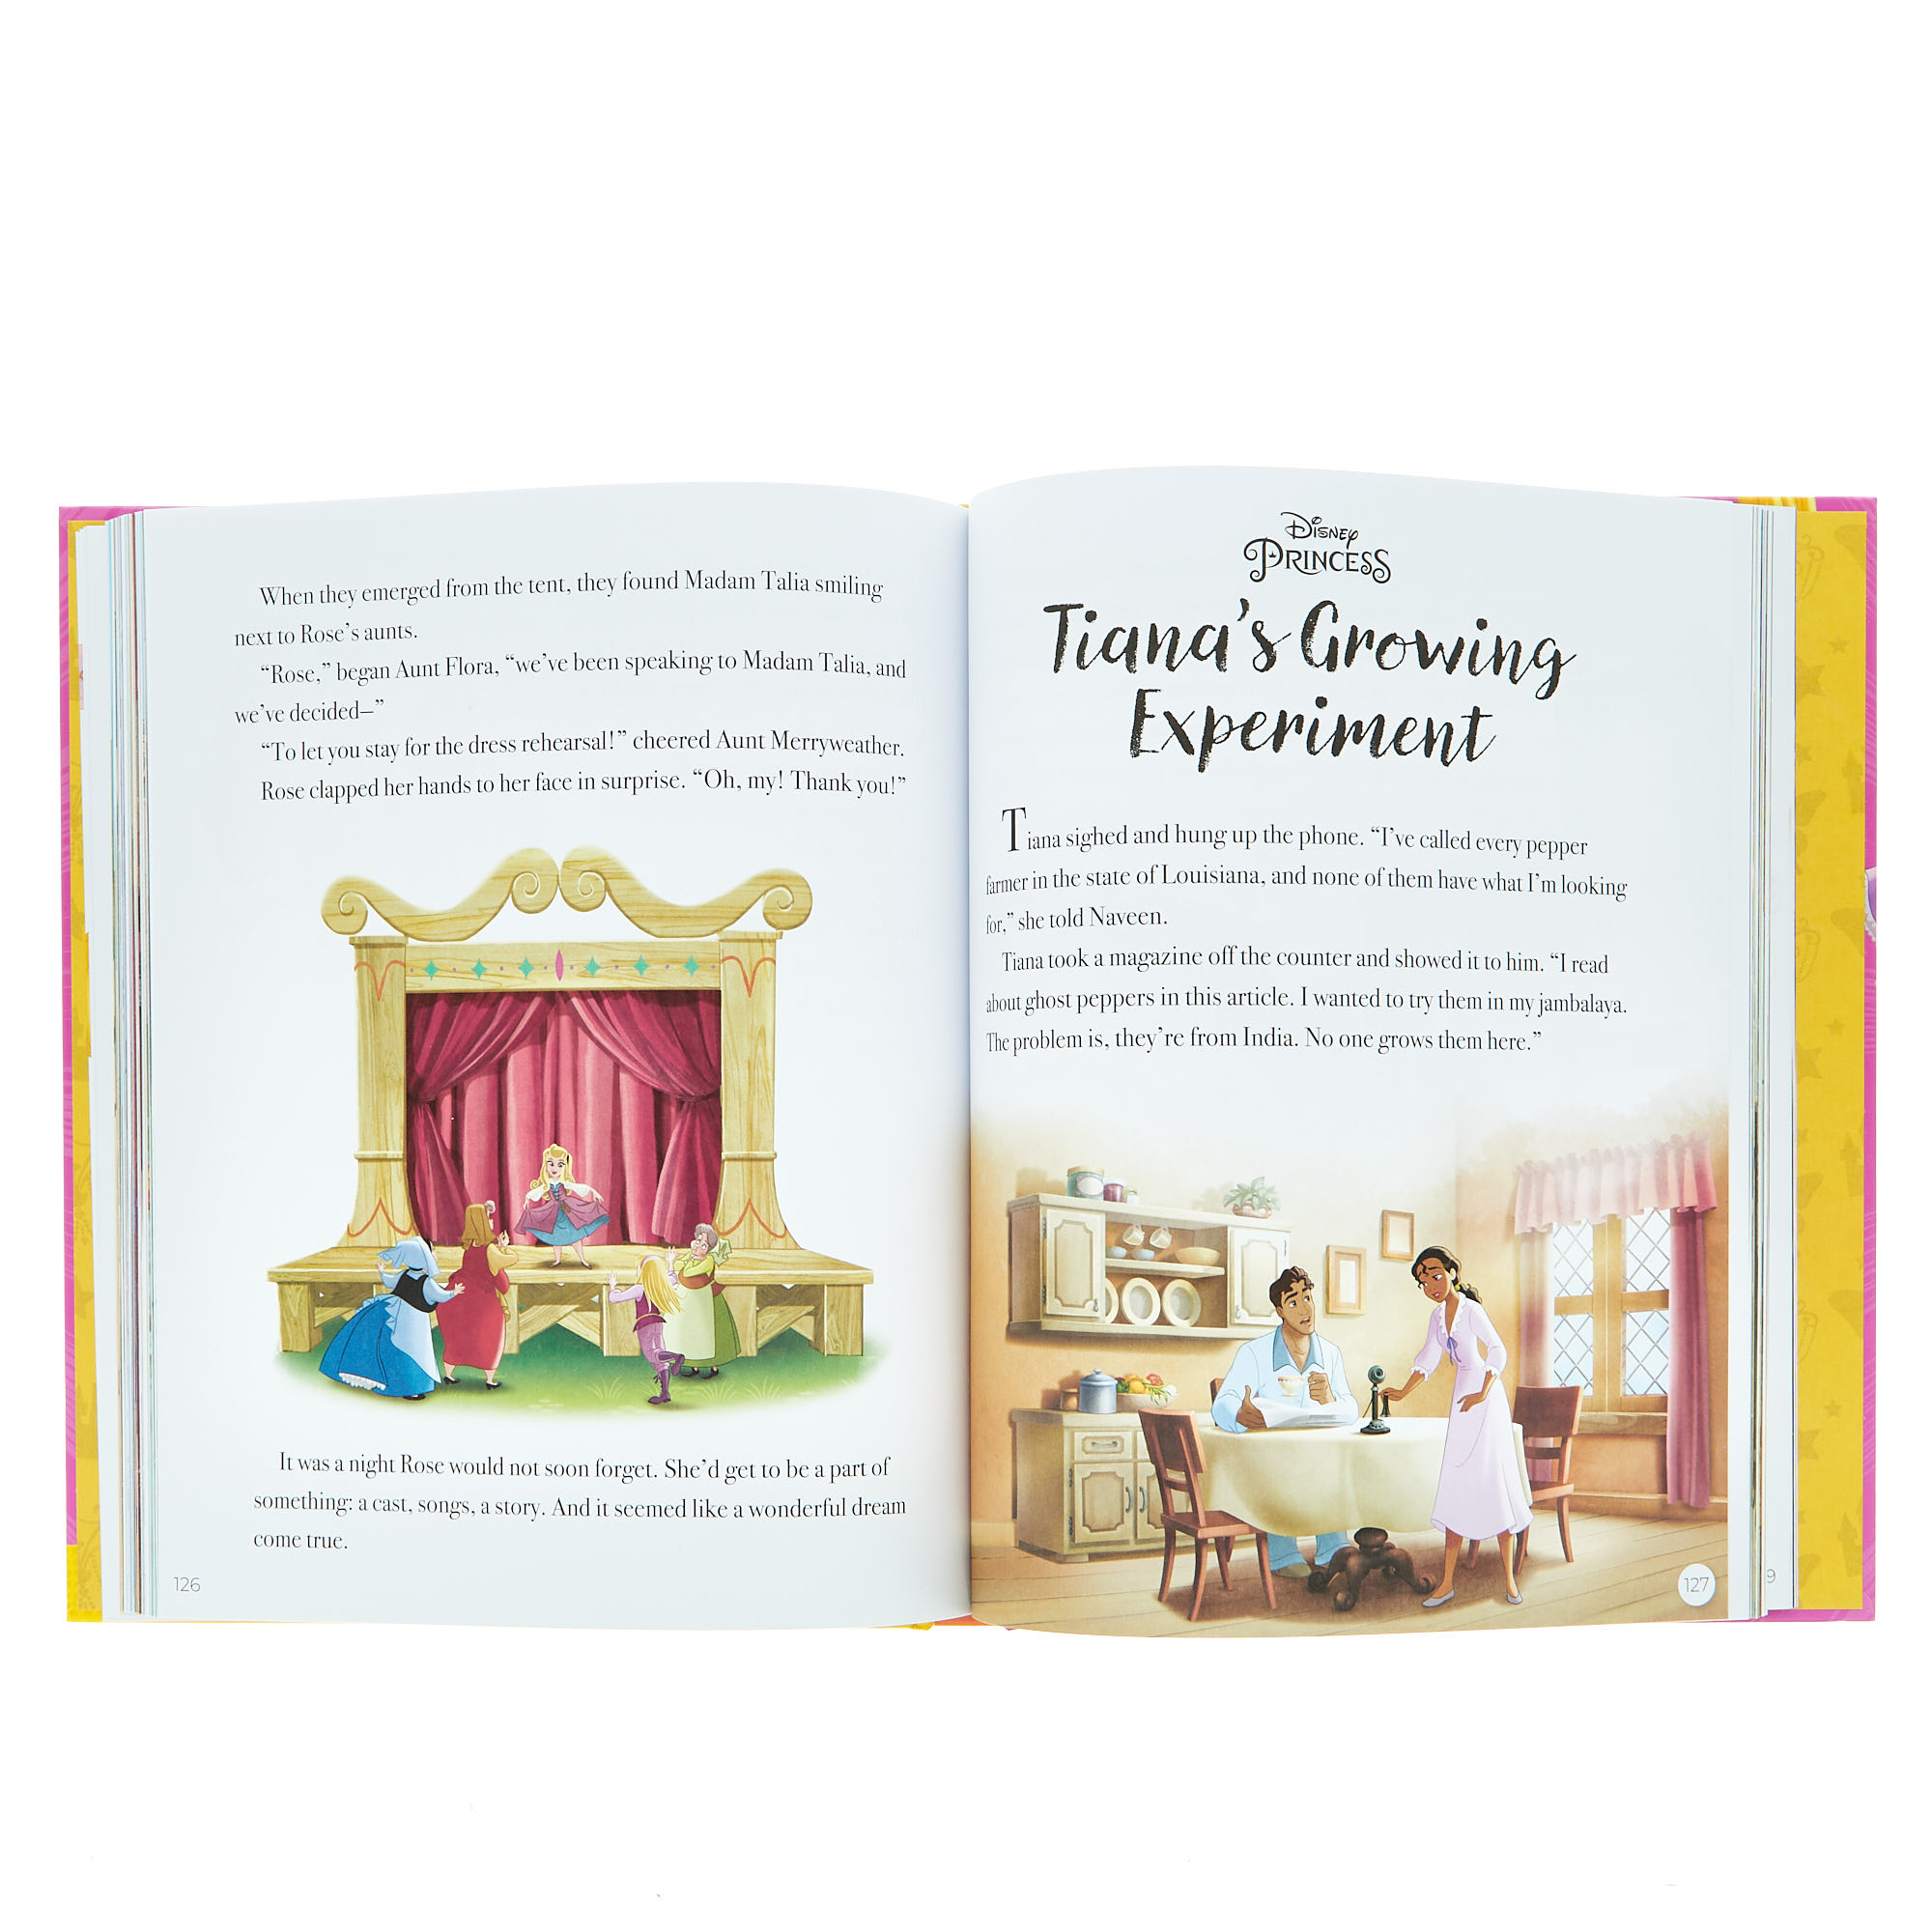 Buy Disney Princess 5 Minute Stories For Gbp 499 Card Factory Uk 